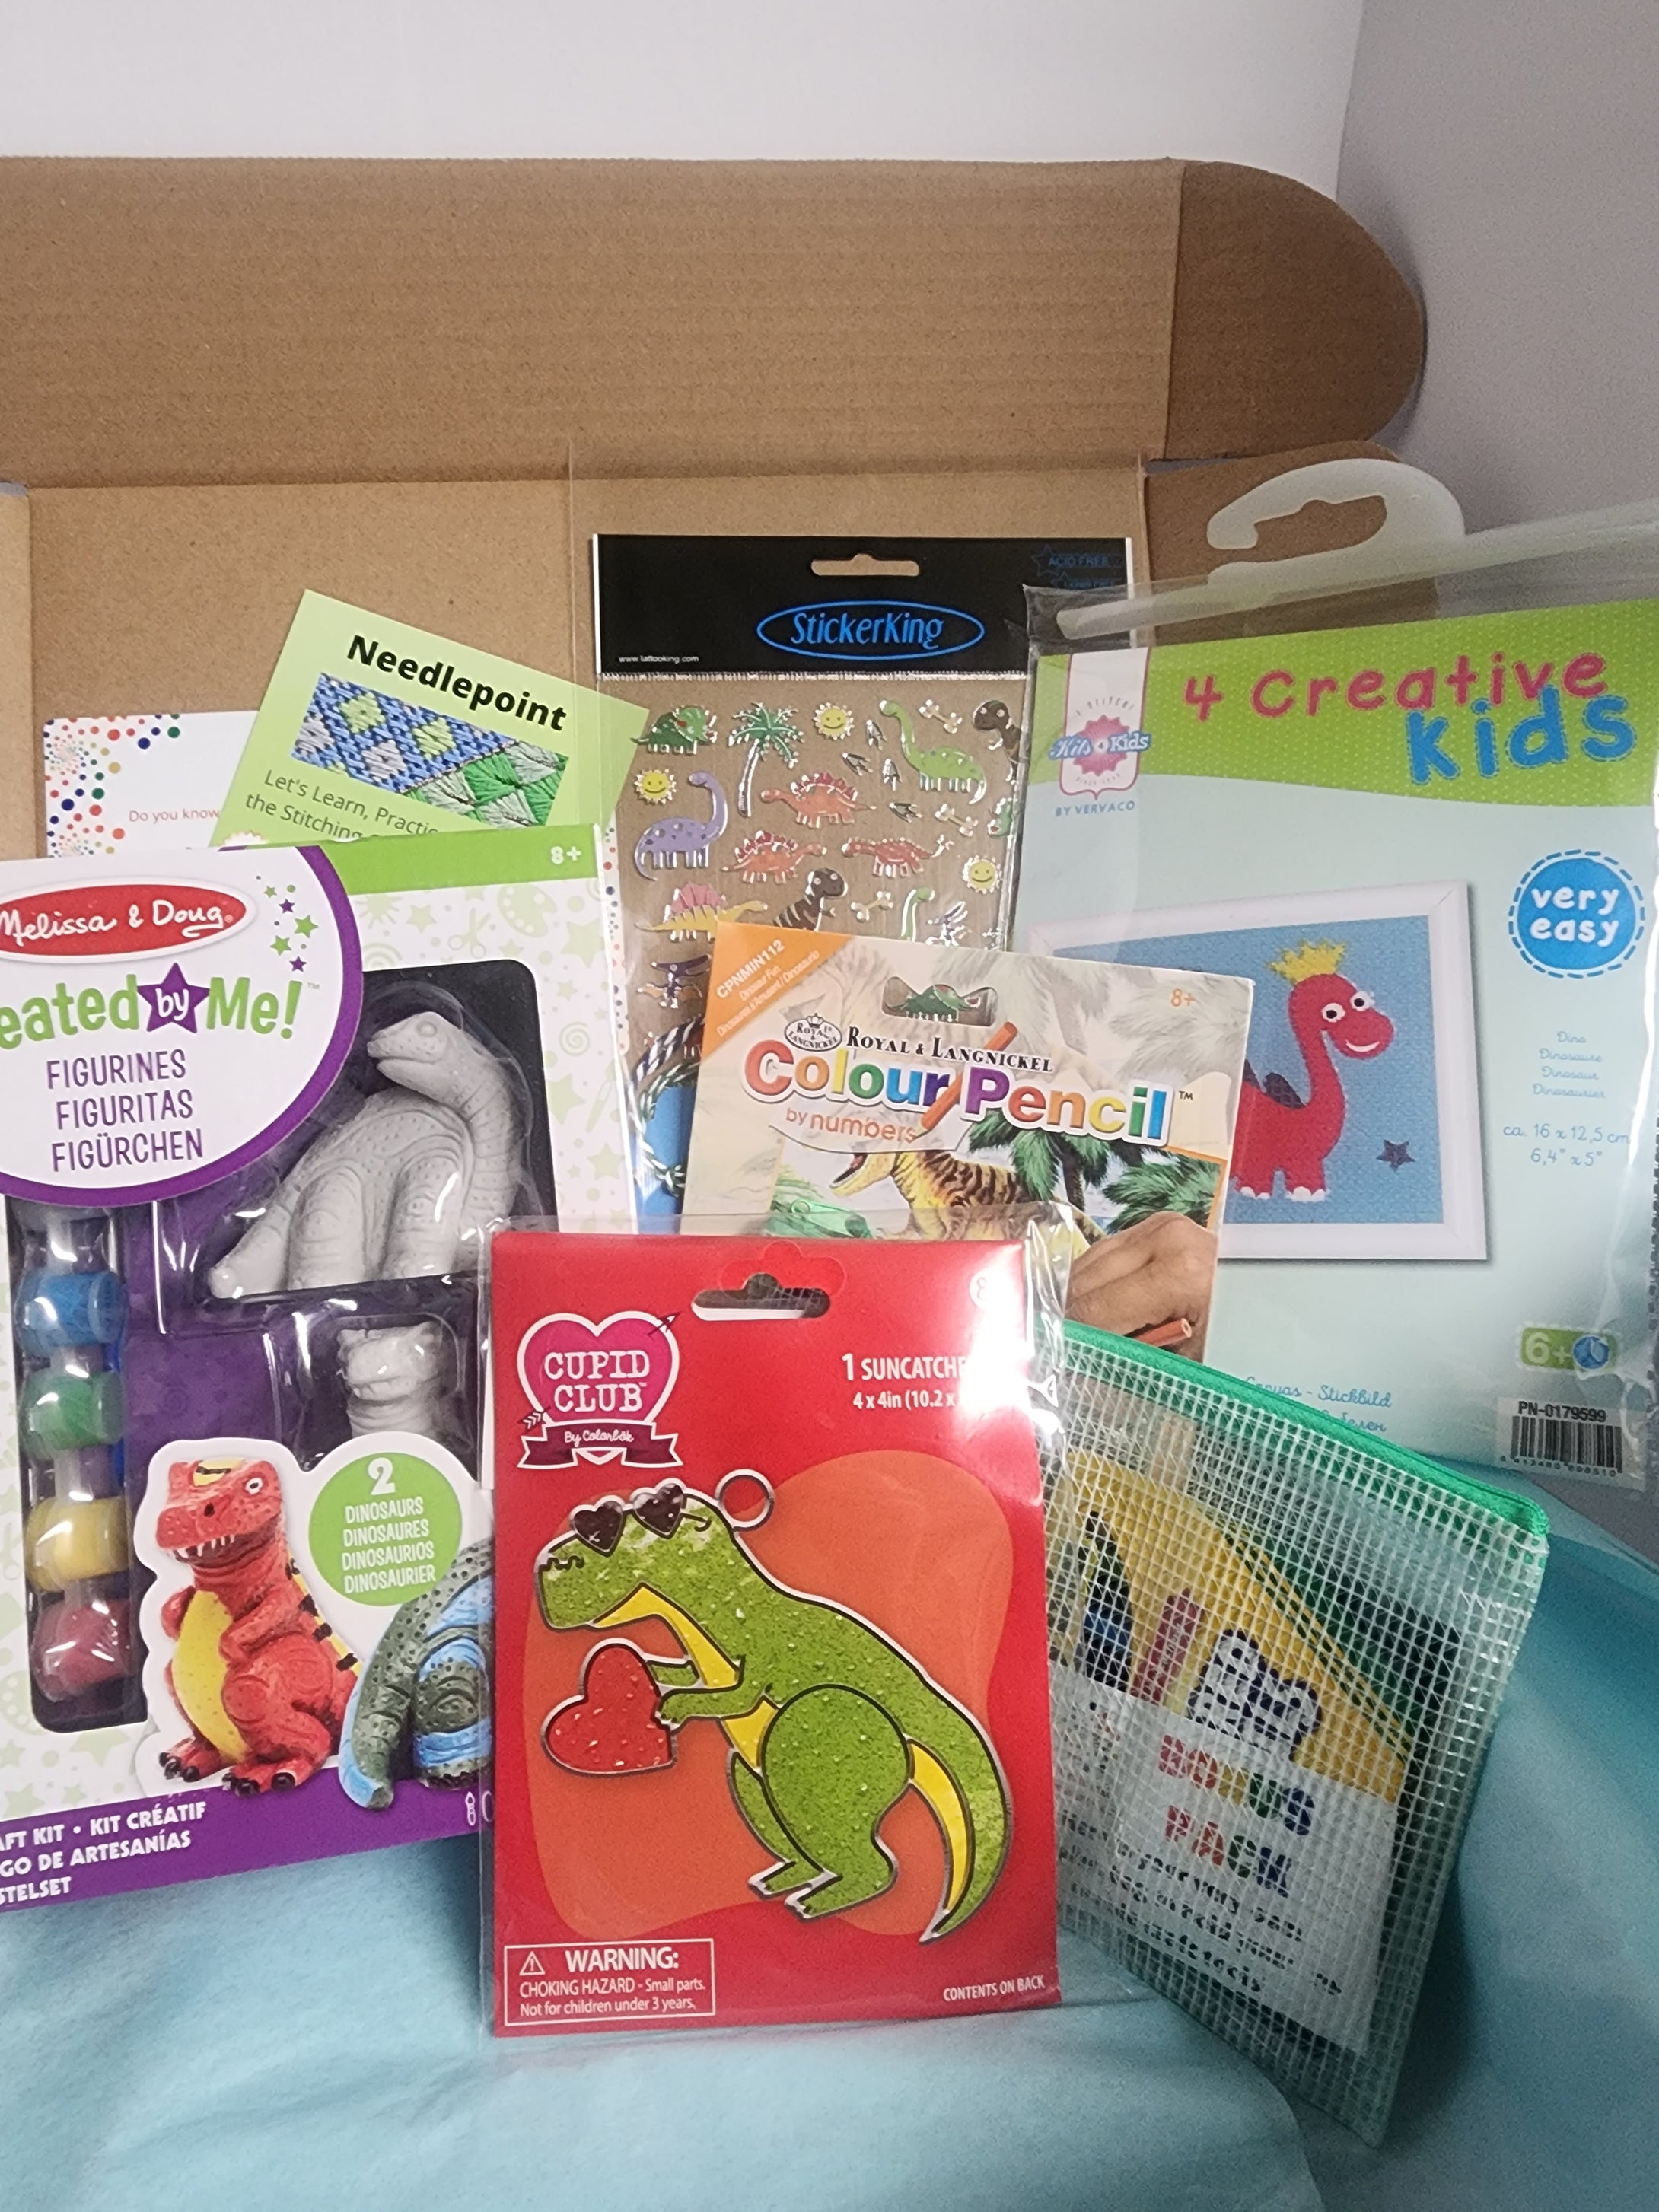 Craft 'n Stitch Dinosaur Crafts Gift Box for Kids Ages 7-9